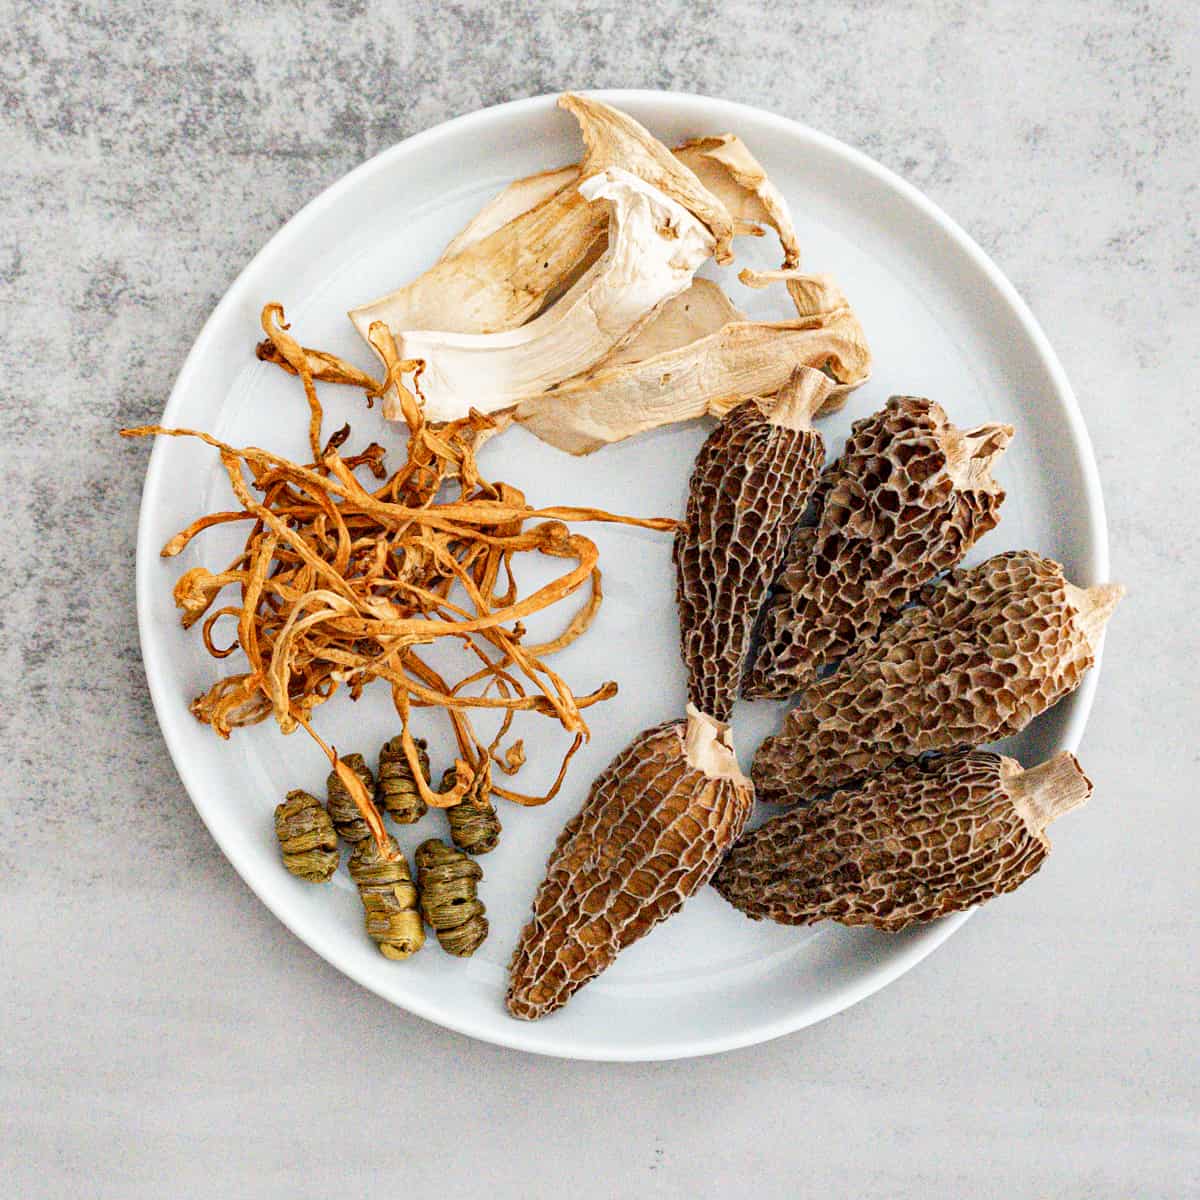 Wild Matsutake Morel and Cordyceps Mushroom Soup 松茸菇羊肚菌石斛養生湯